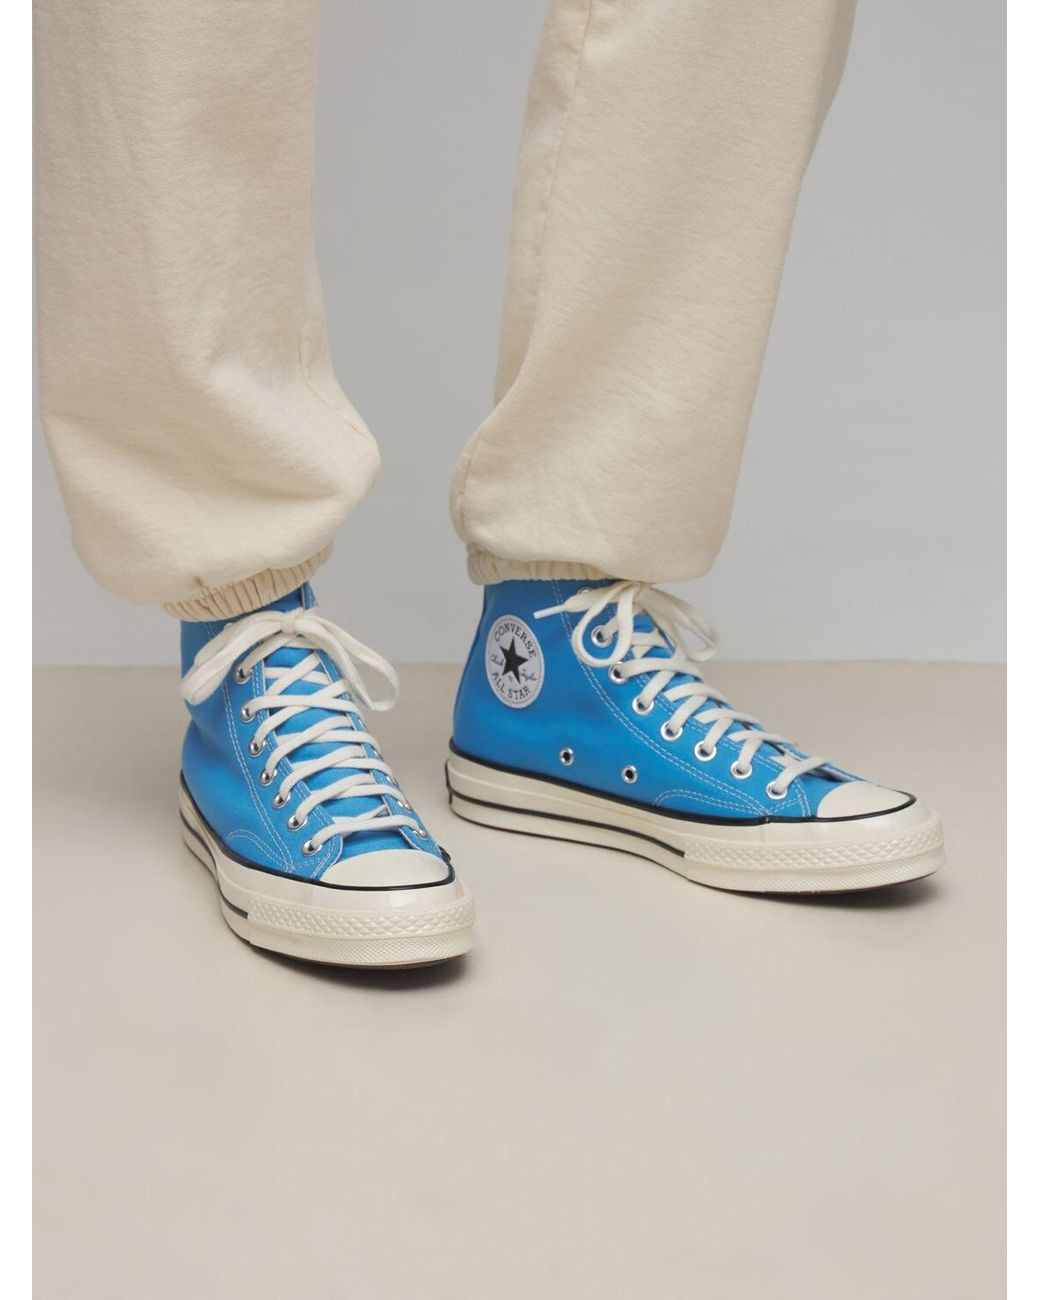 Converse Canvas Chuck 70 Hi Sneakers in University Blue (Blue) - Lyst